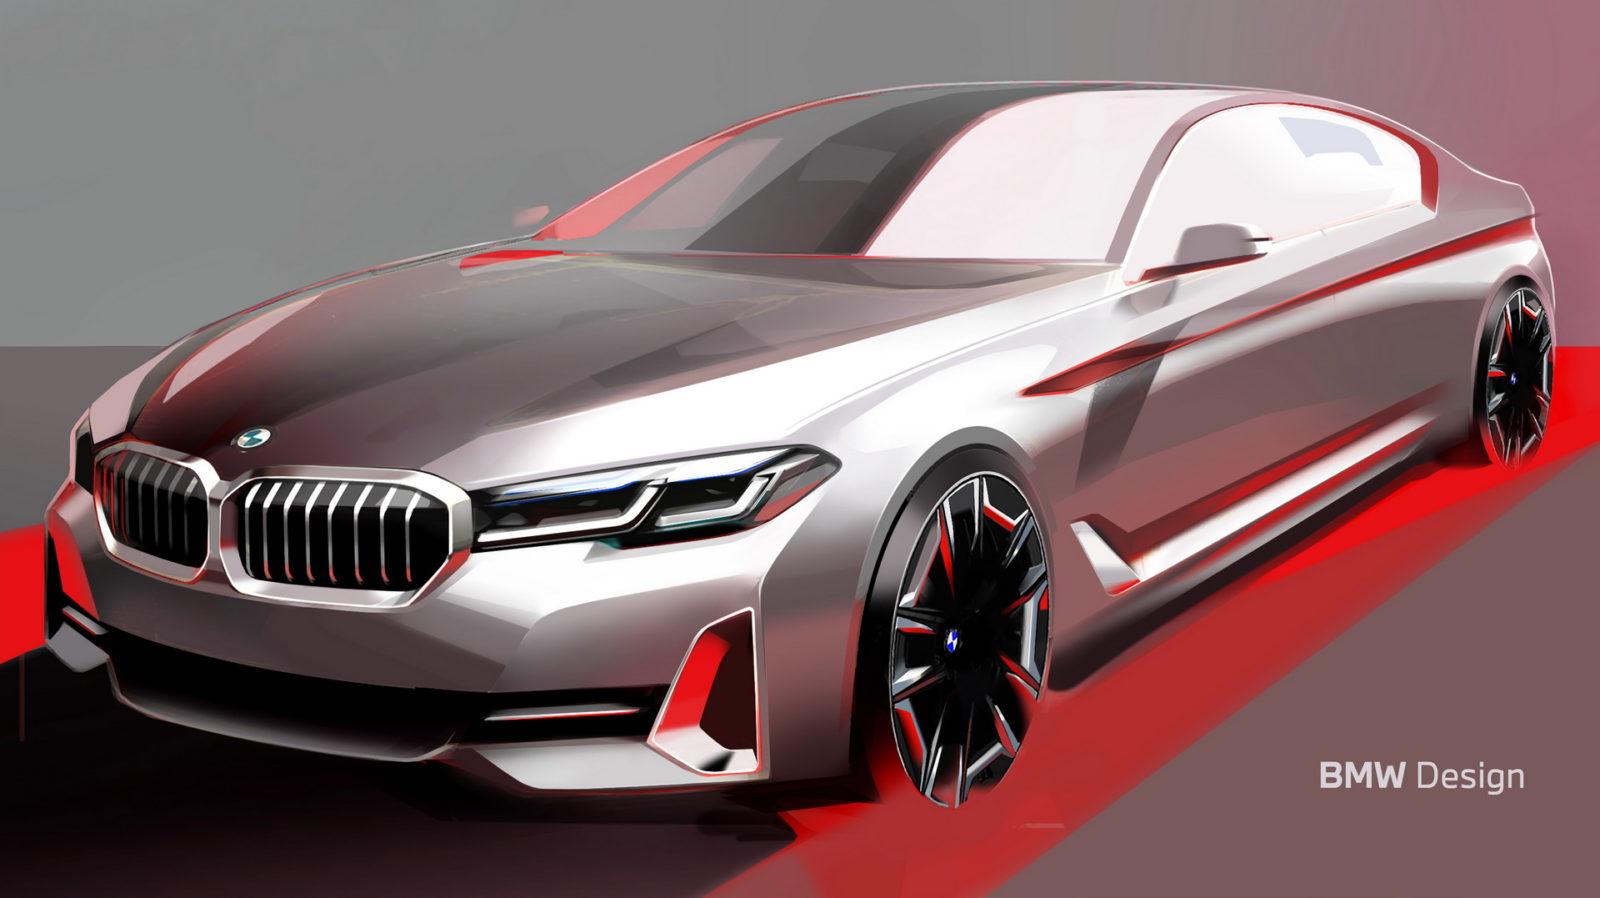 The New BMW 5 Series LCI Design Sketch 1 830x466